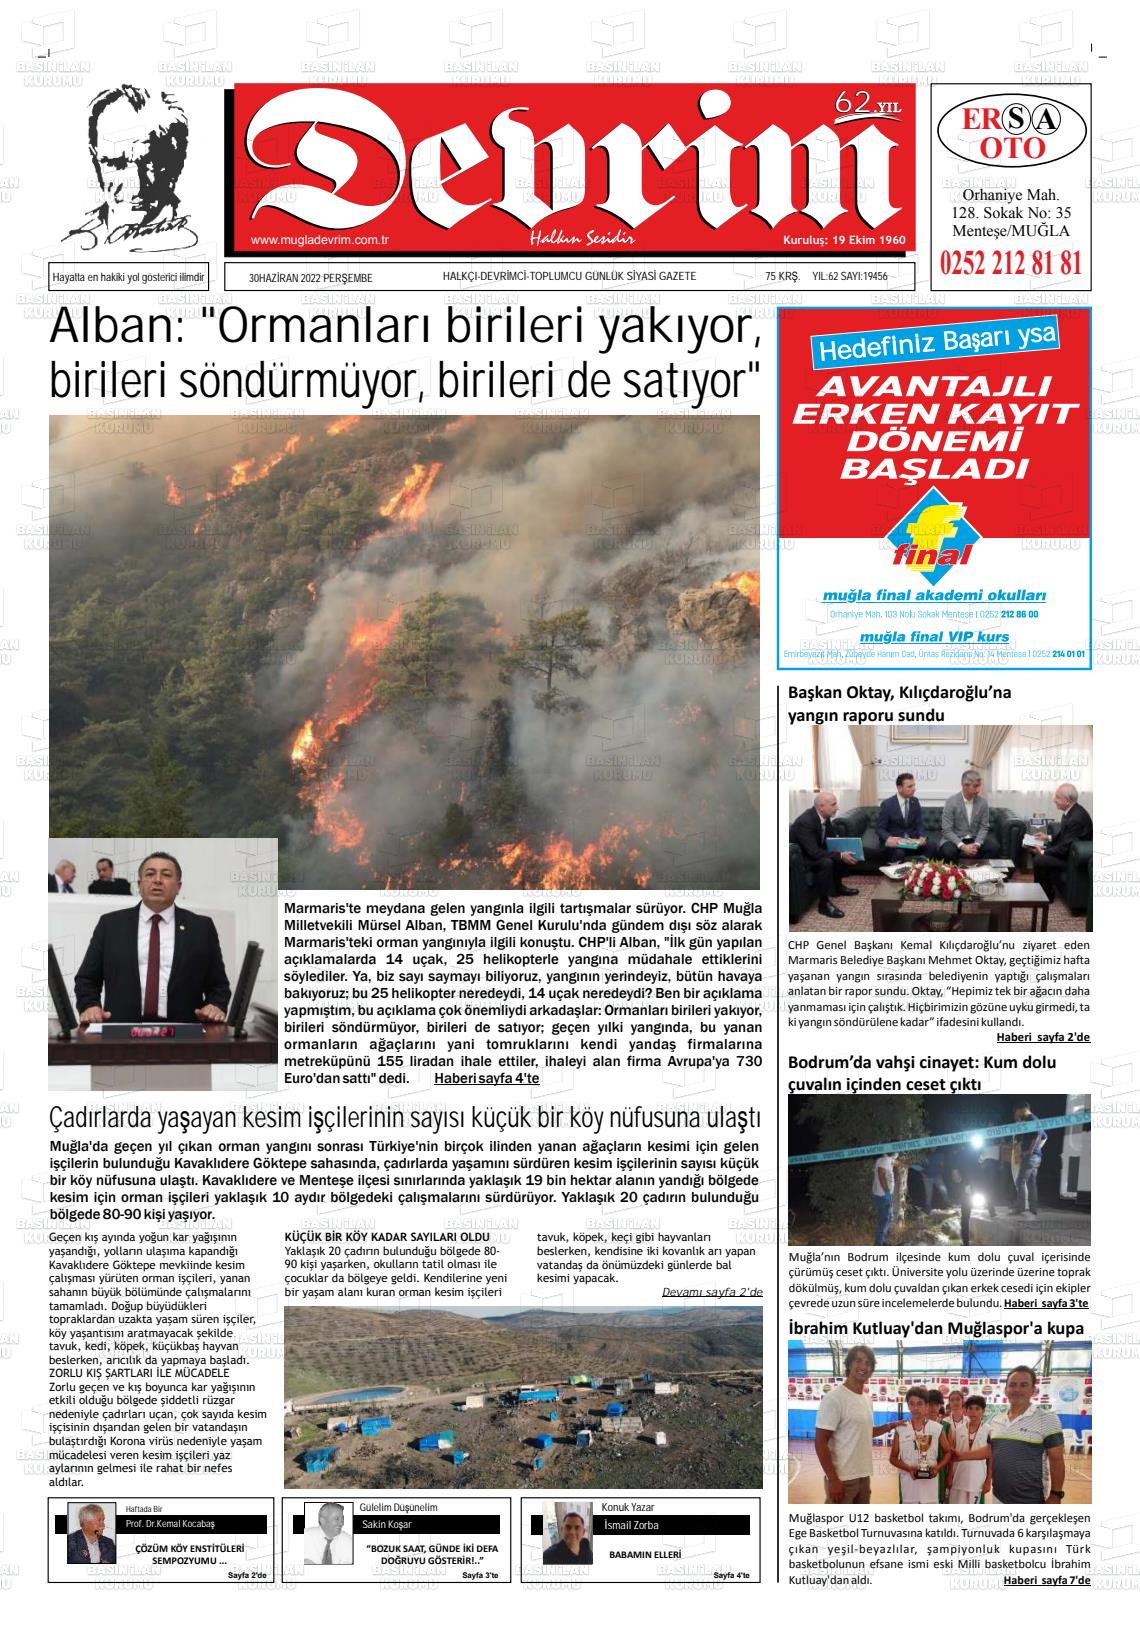 02 Temmuz 2022 Muğla Devrim Gazete Manşeti